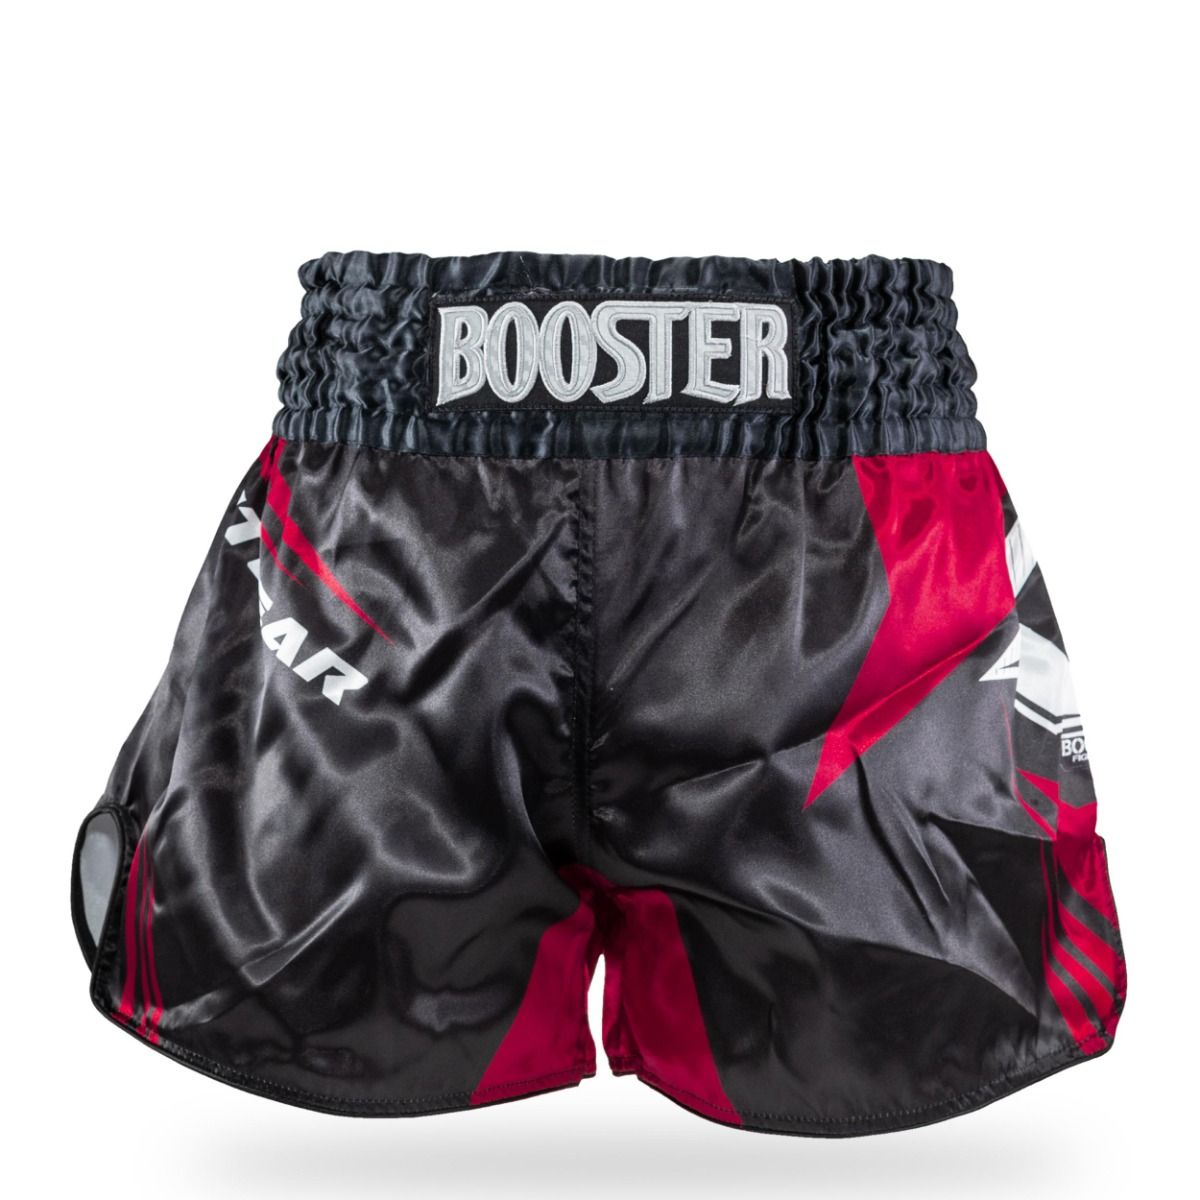 Booster Fight GEAR - Fightshort - korte broek - XPLOSION 2 -Zwart - Rood - Black - Red